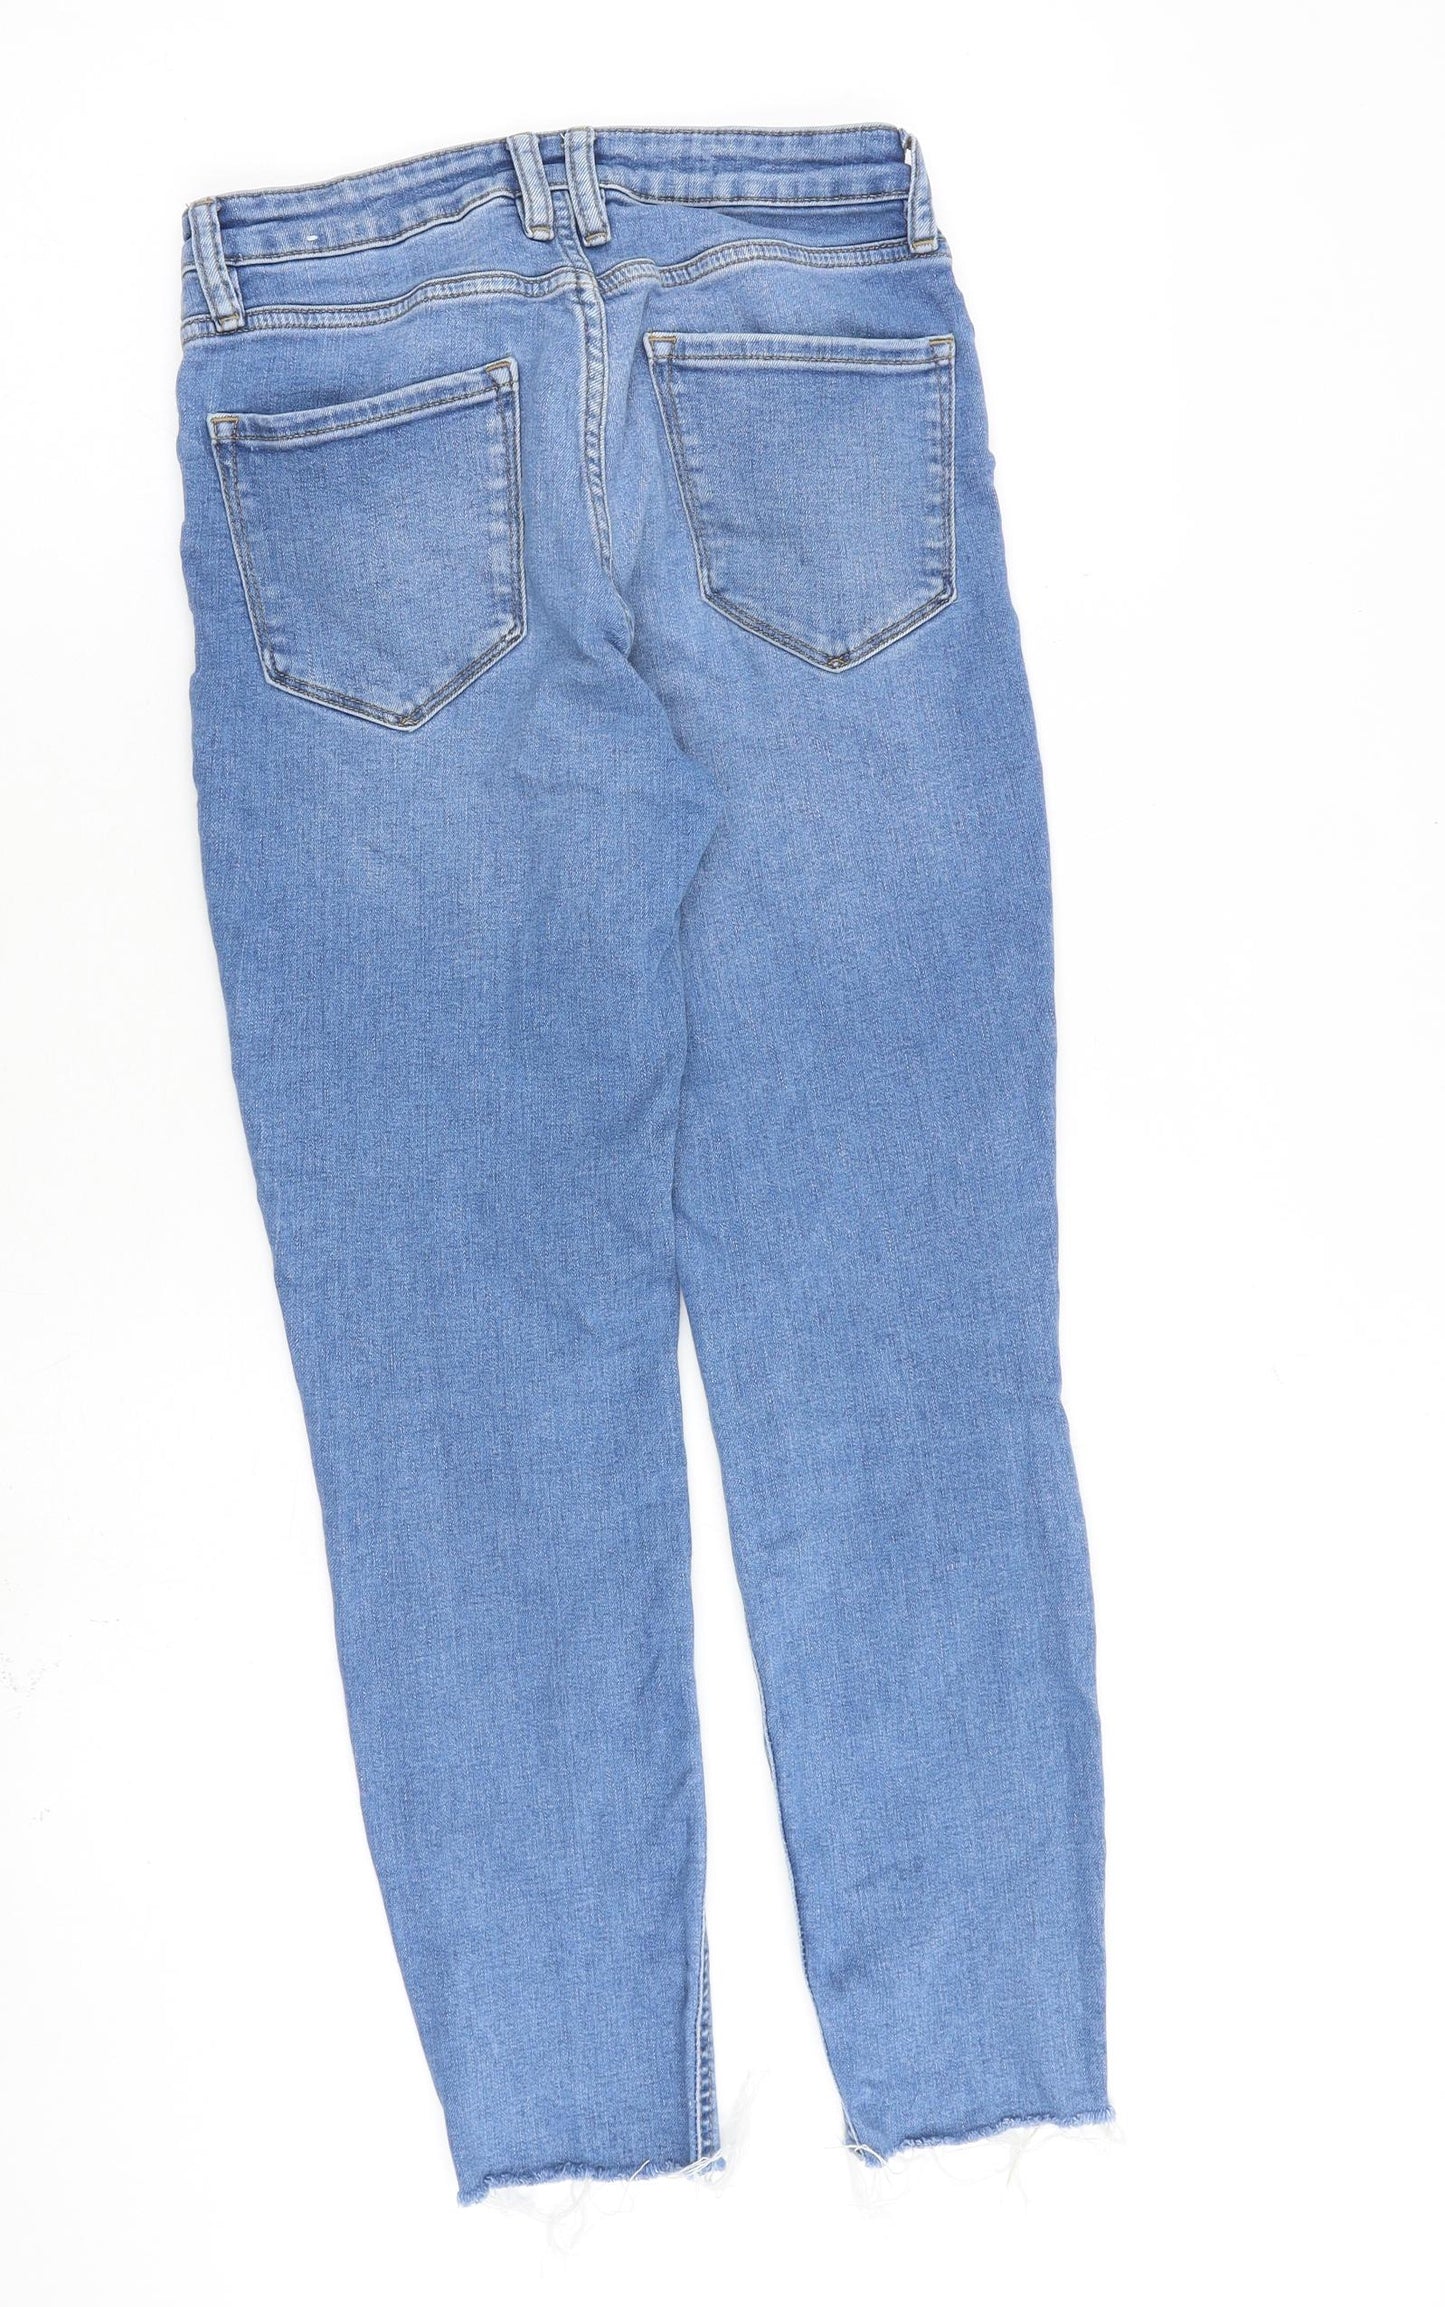 Mango Womens Blue Cotton Skinny Jeans Size 10 L27 in Regular Zip - Raw Hem